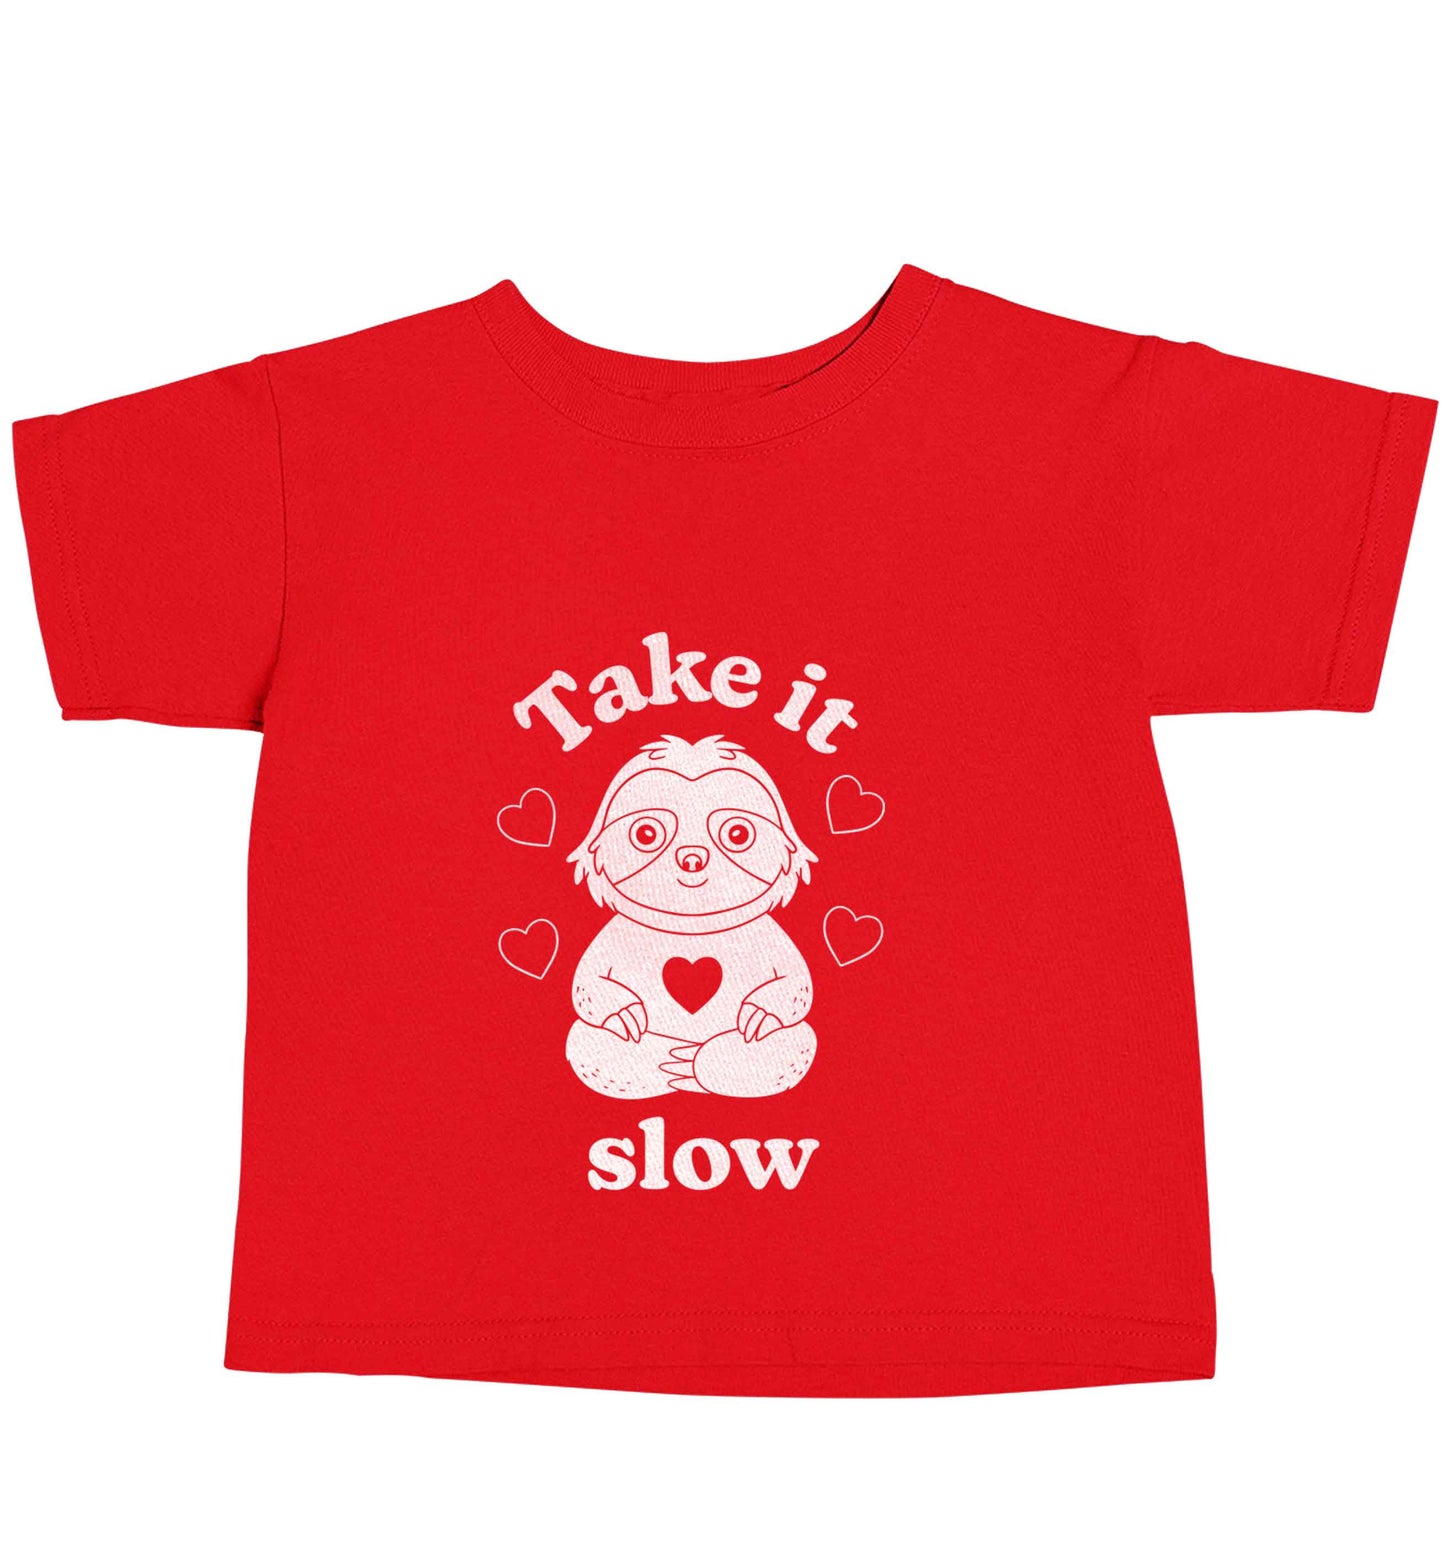 Take it slow red baby toddler Tshirt 2 Years